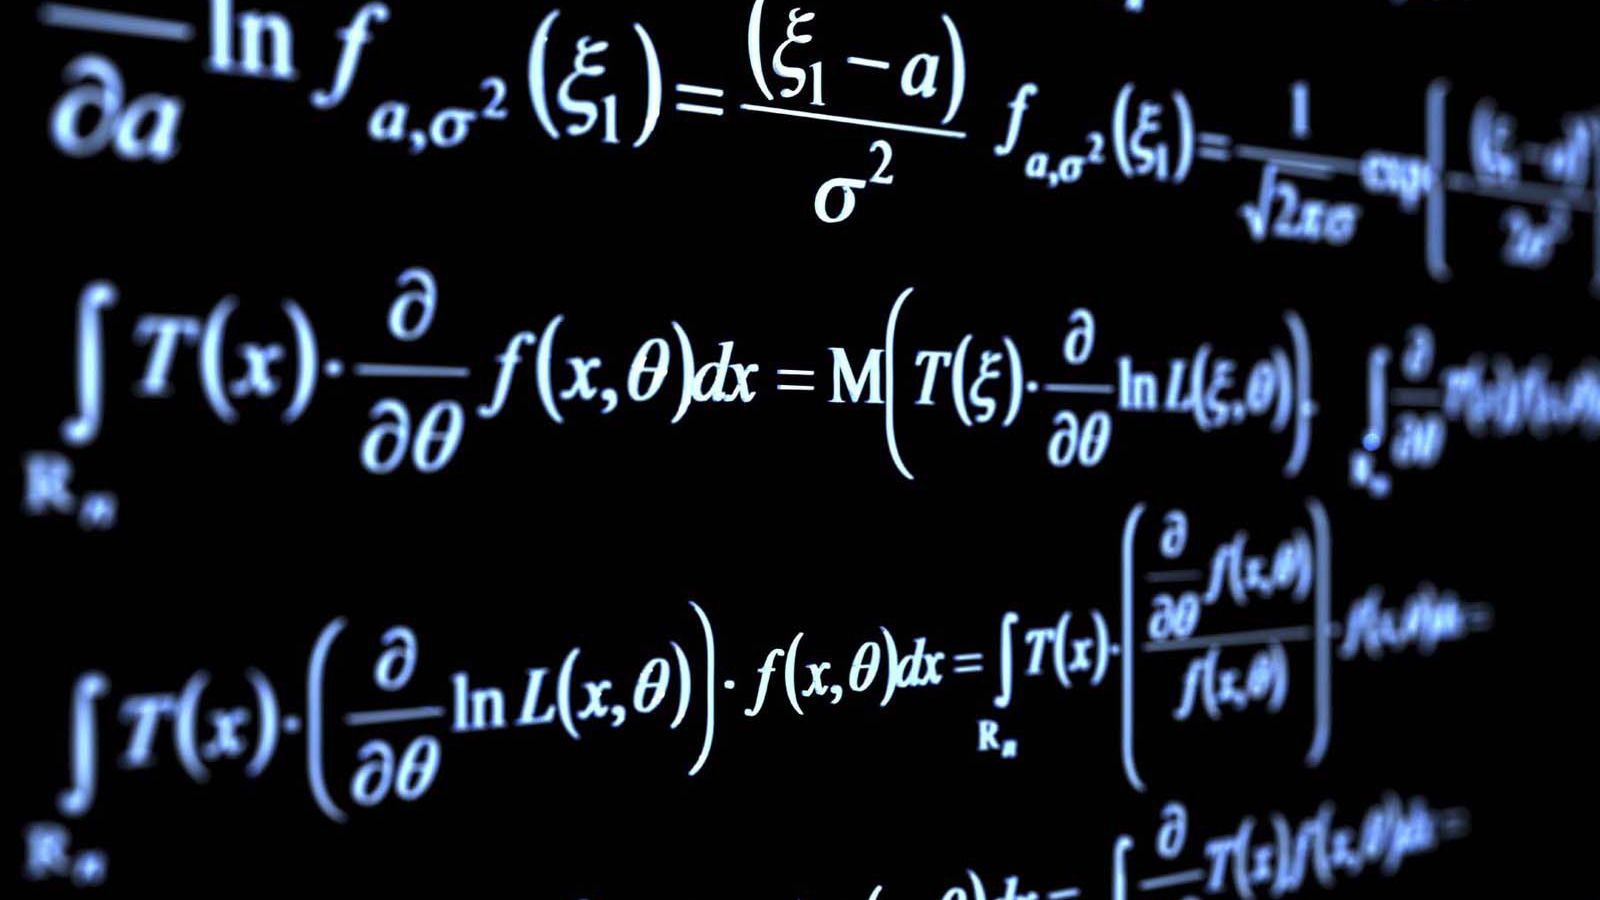 Do You Really Need to Study Math to Crack AI?